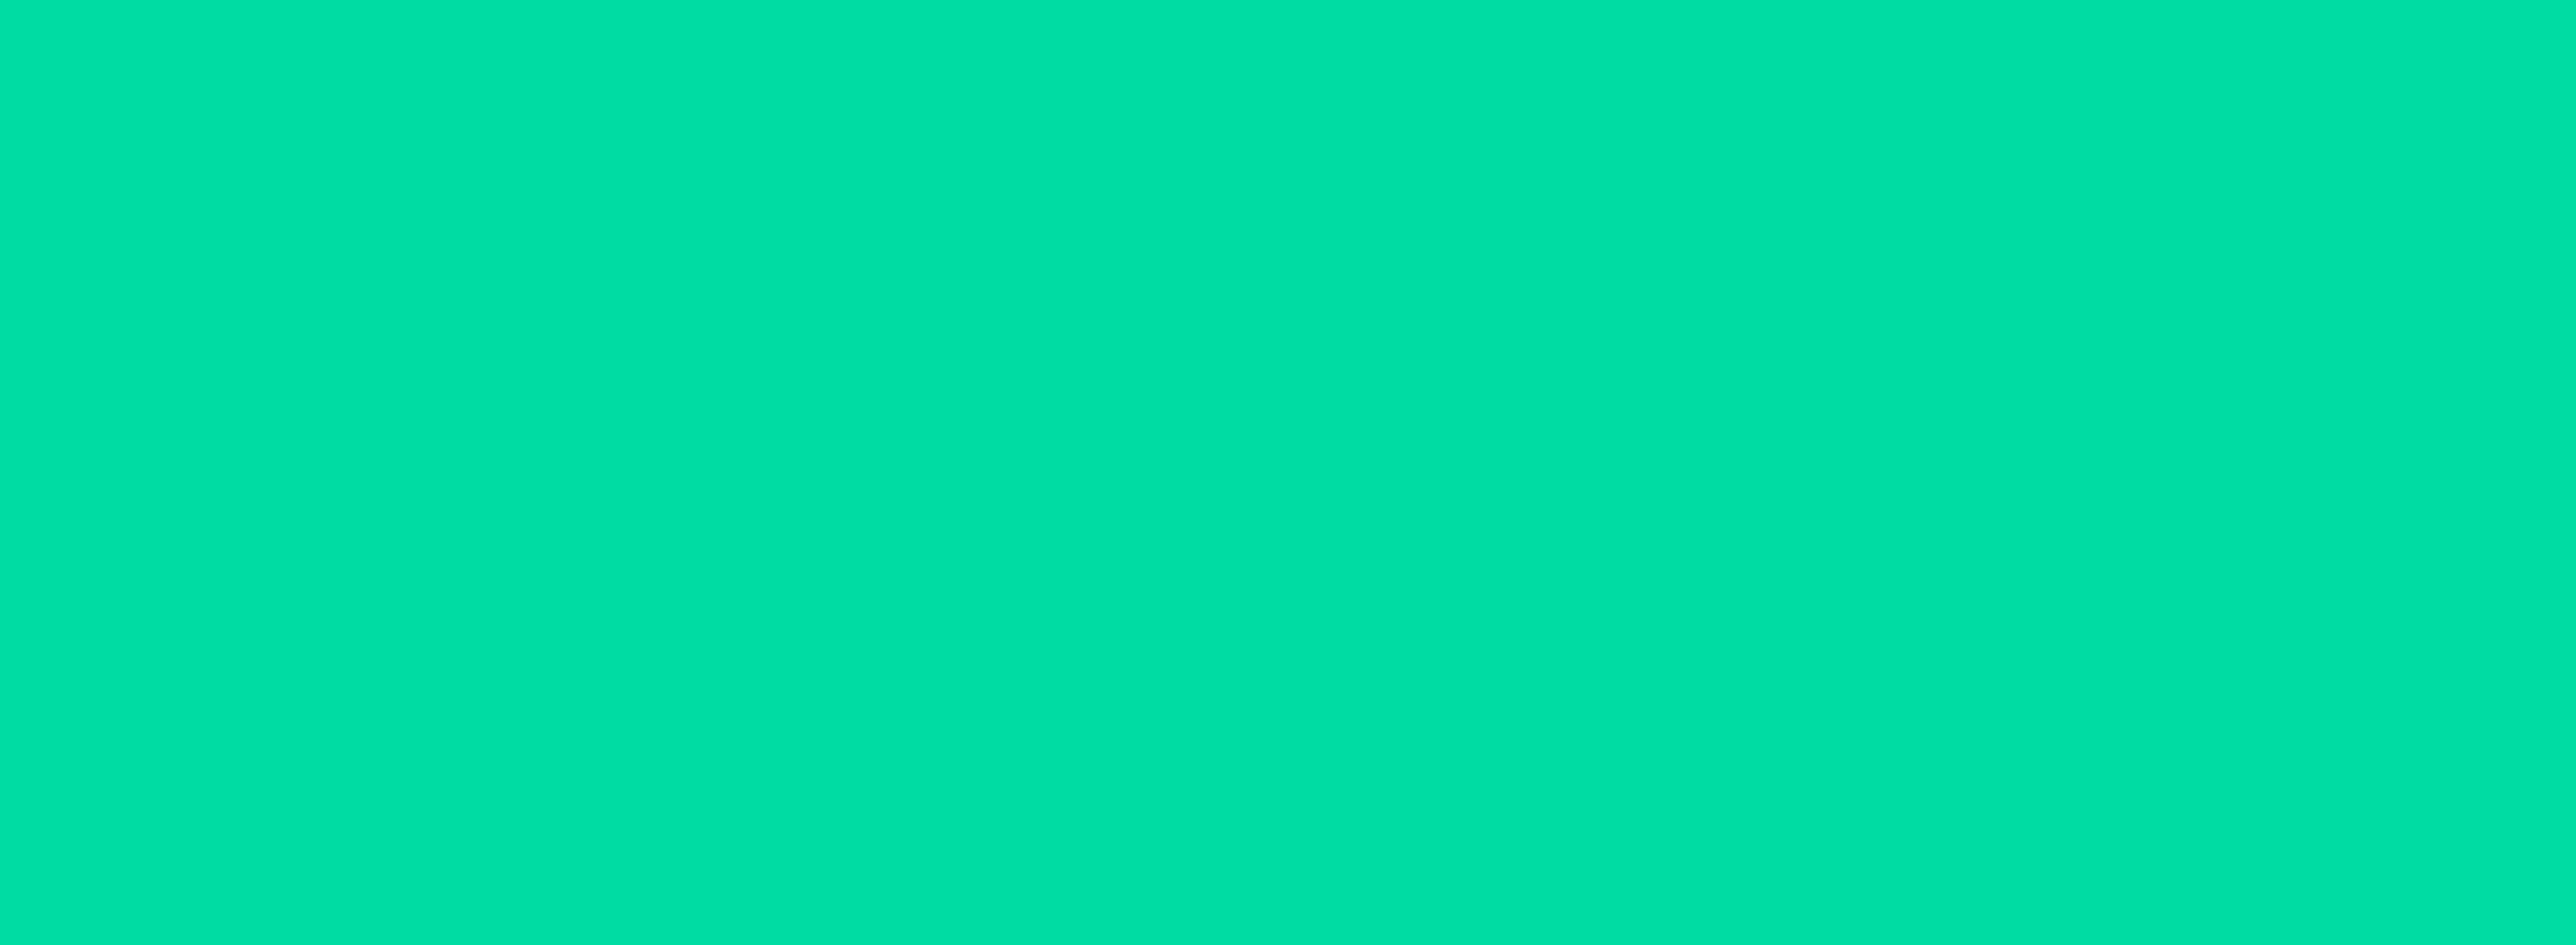 Plain green colour block